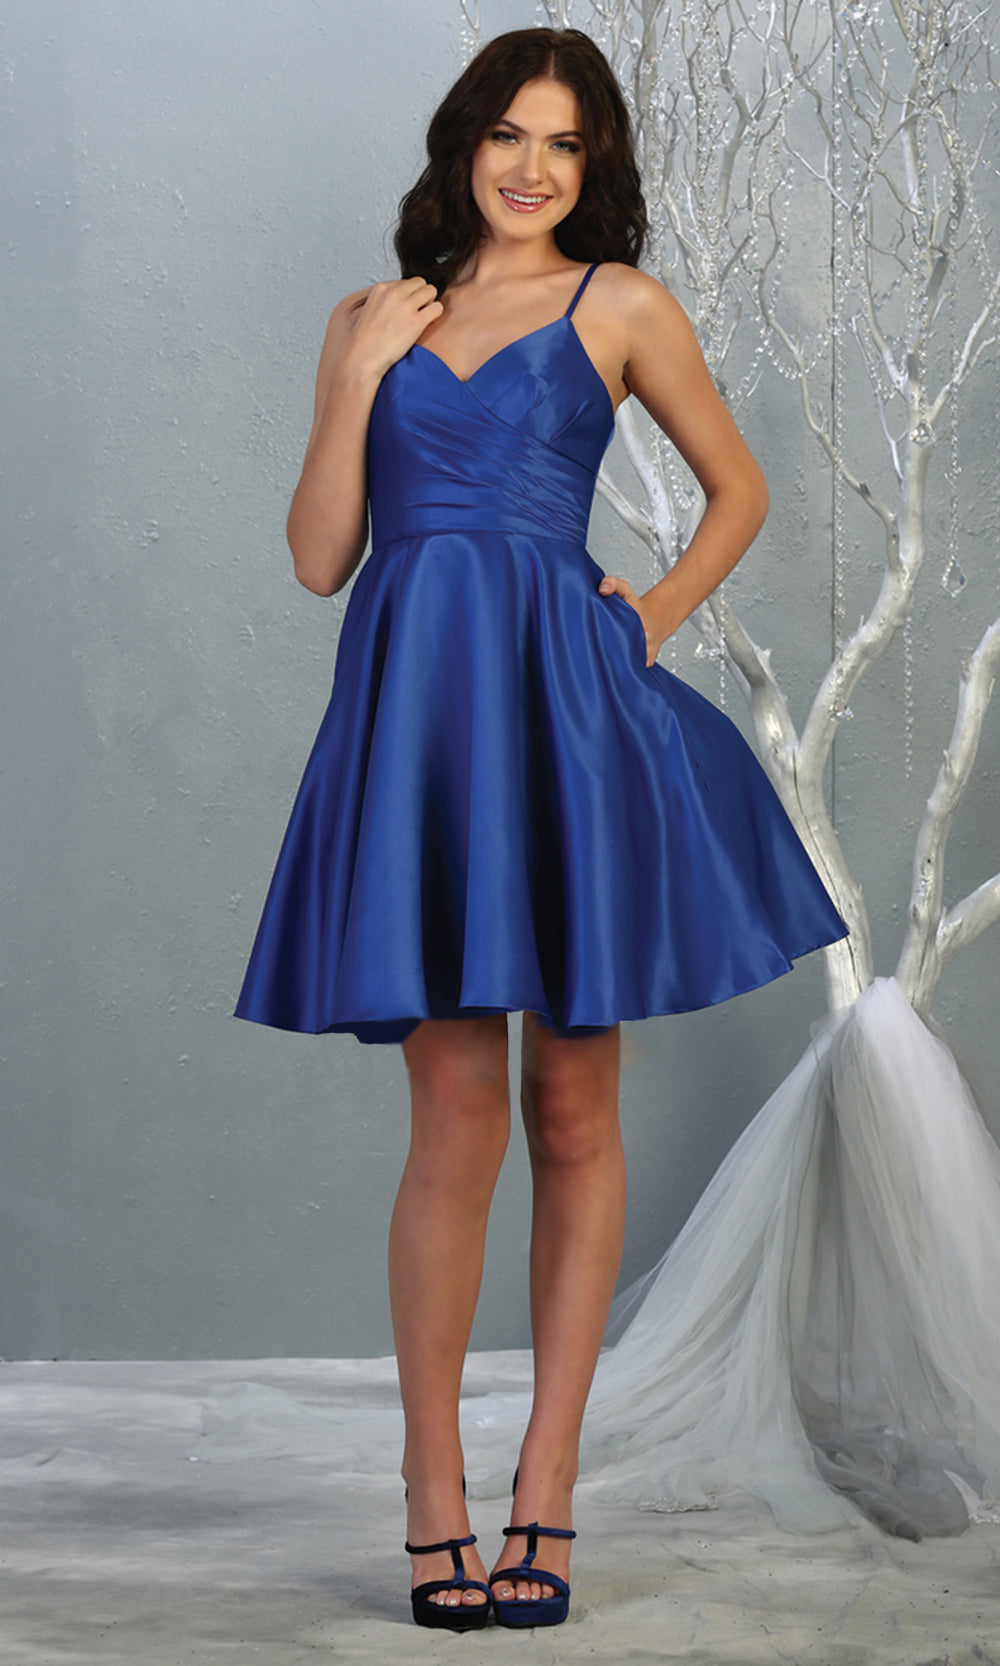 Sweet Jenny I Dress In Bluegrade 8 grad dresses, graduation dresses